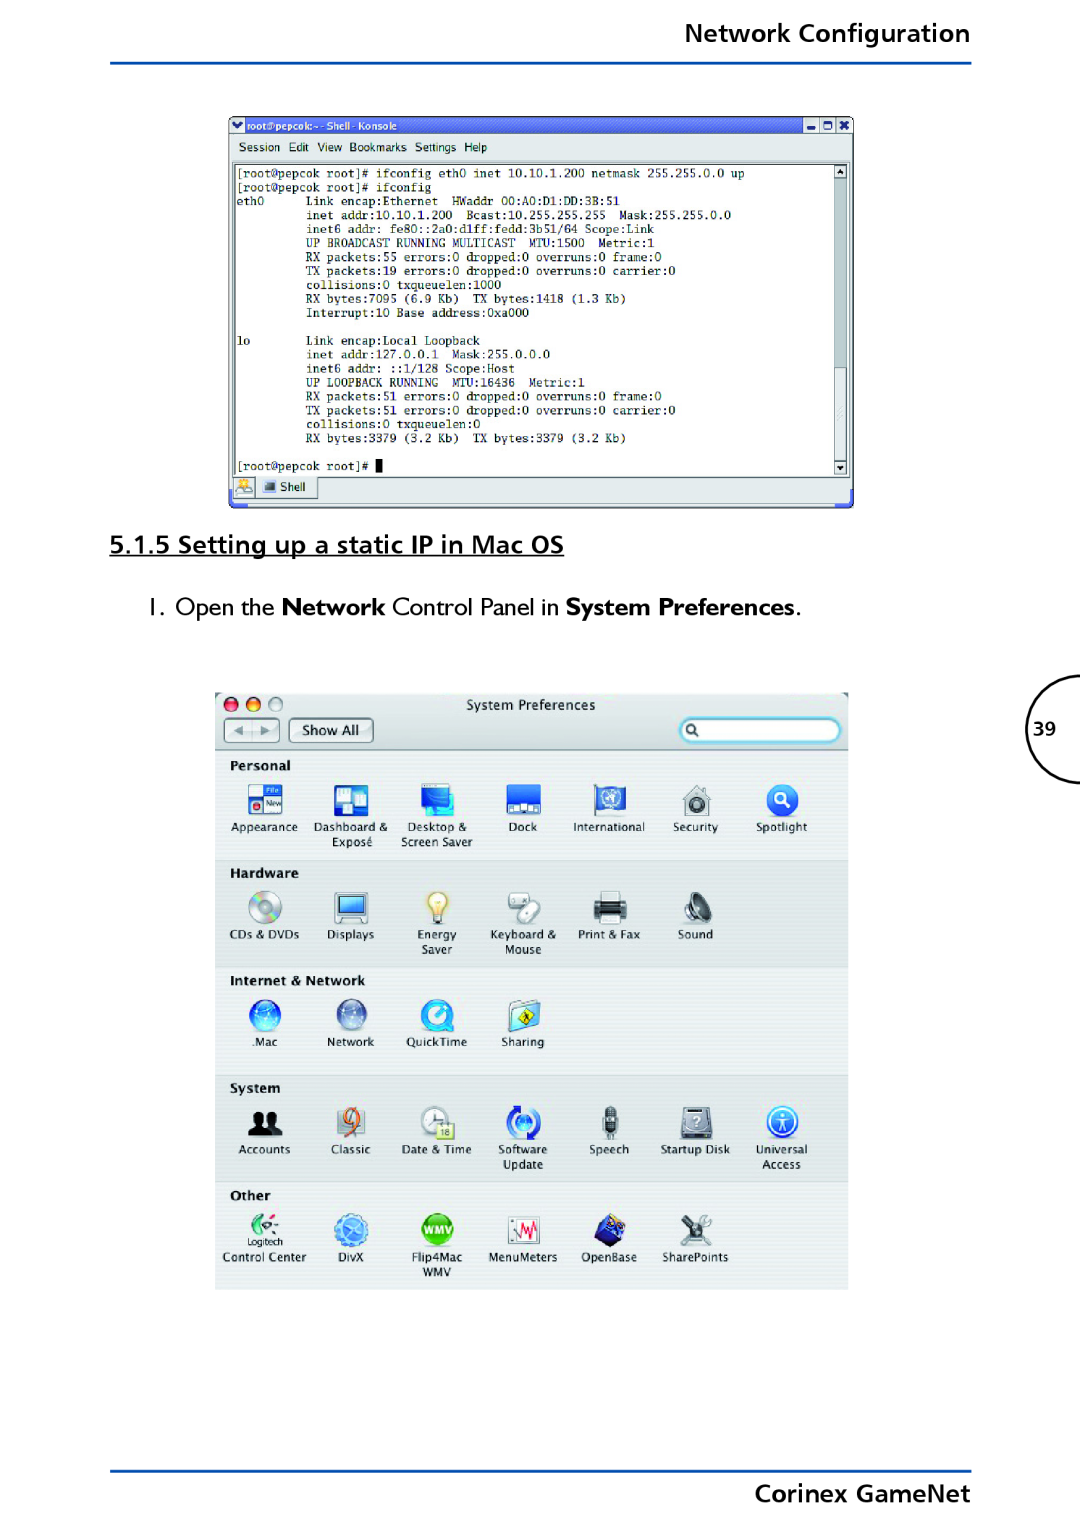 Corinex Global manual Network Configuration 5.1.5 Setting up a static IP in Mac OS, Corinex GameNet 